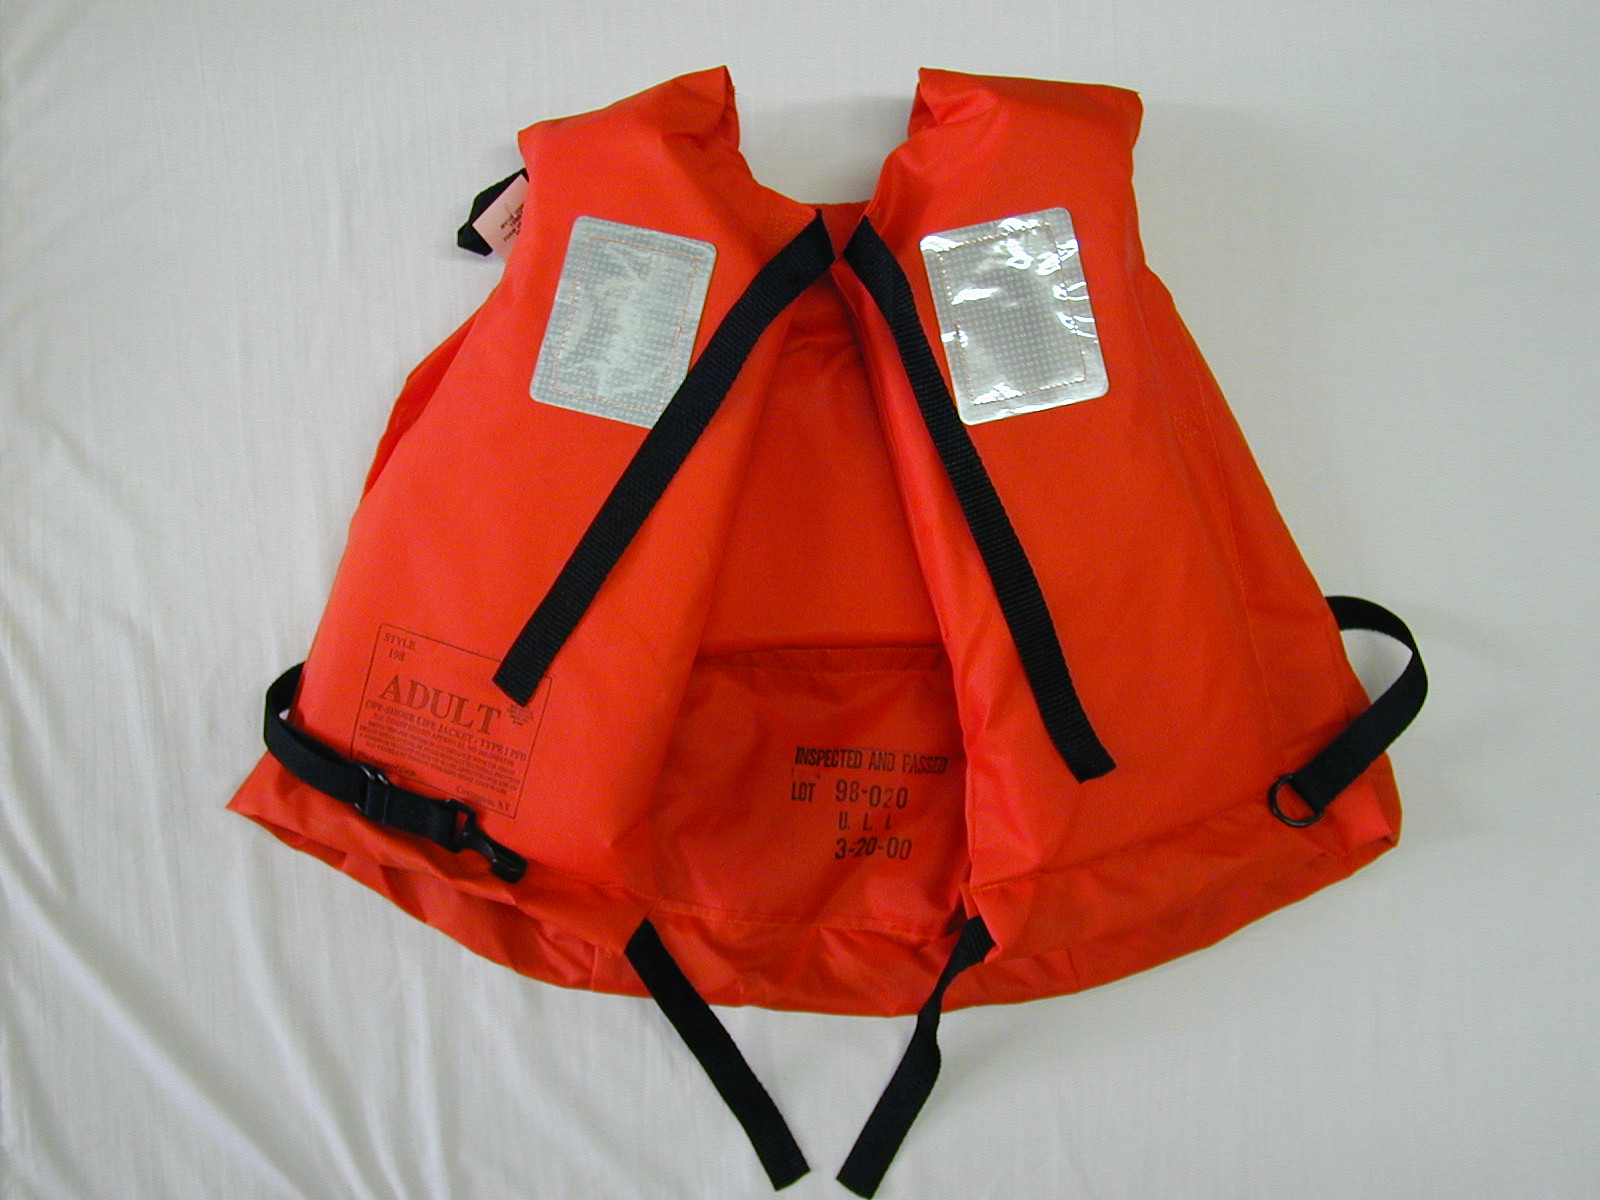 Type I Offshore Safety Work Vest